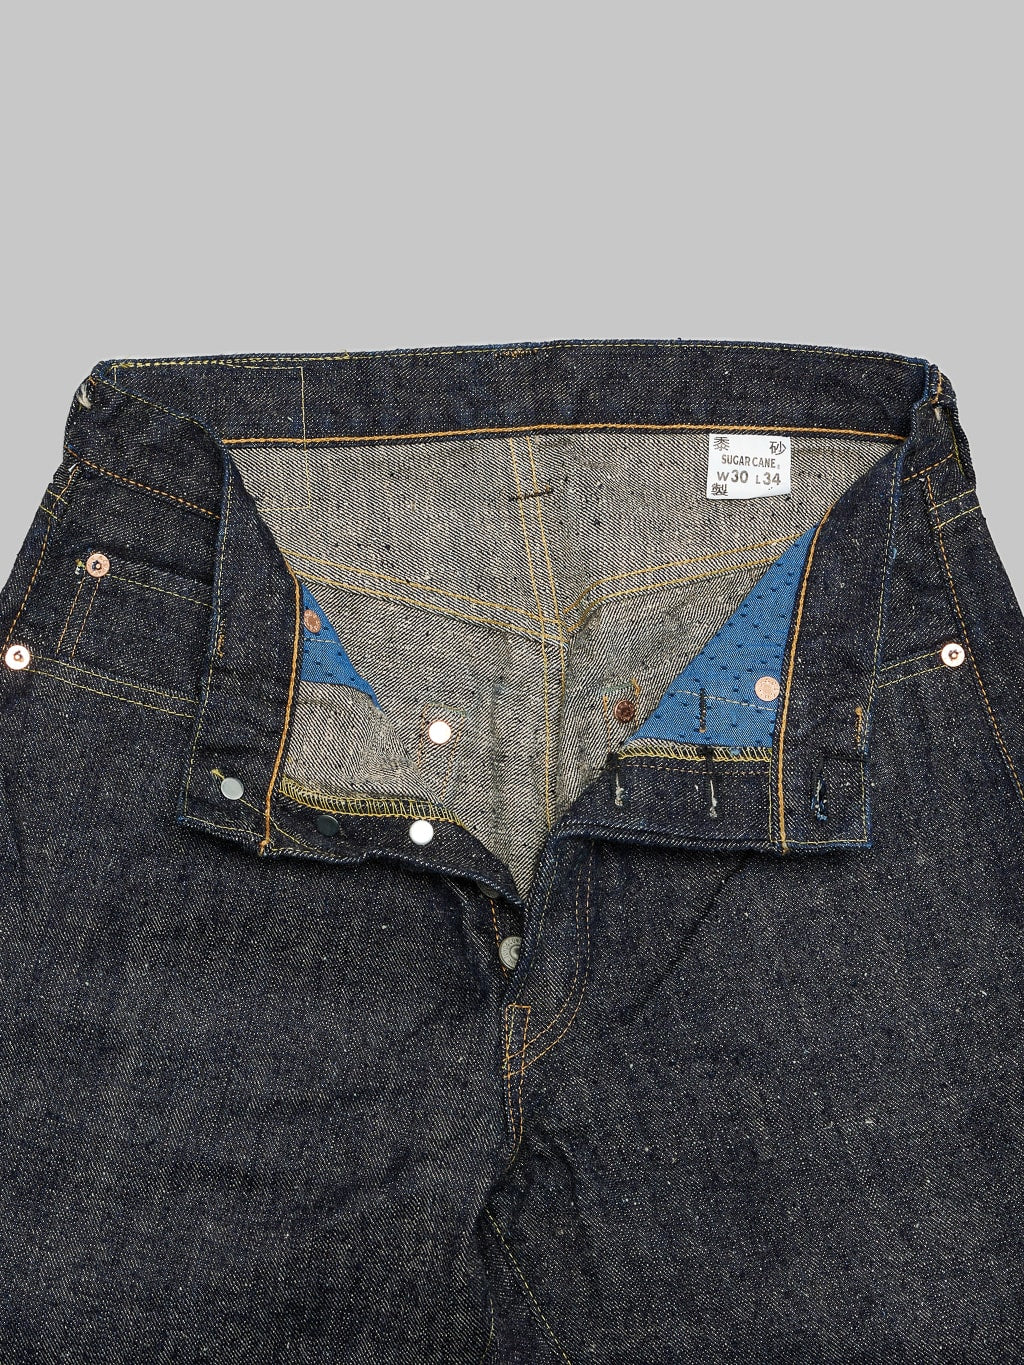 Sugar Cane Okinawa 14oz Regular Straight Jeans  interior fabric